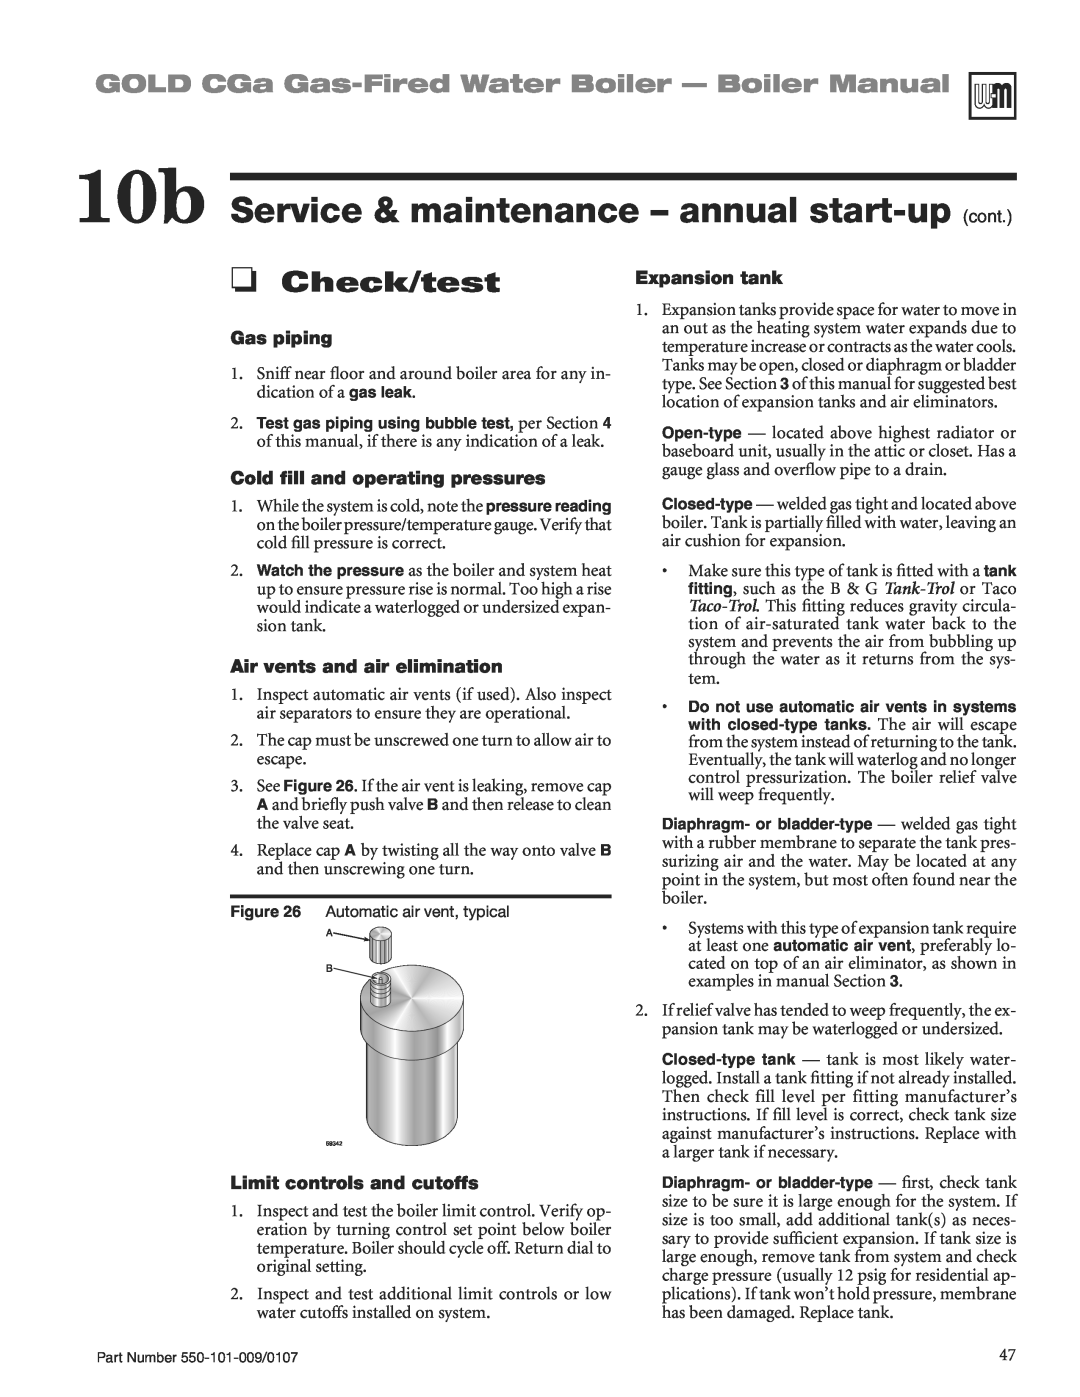 Weil-McLain CGA25SPDN manual OCheck/test, 10b Service & maintenance - annual start-up cont, Gas piping, Expansion tank 